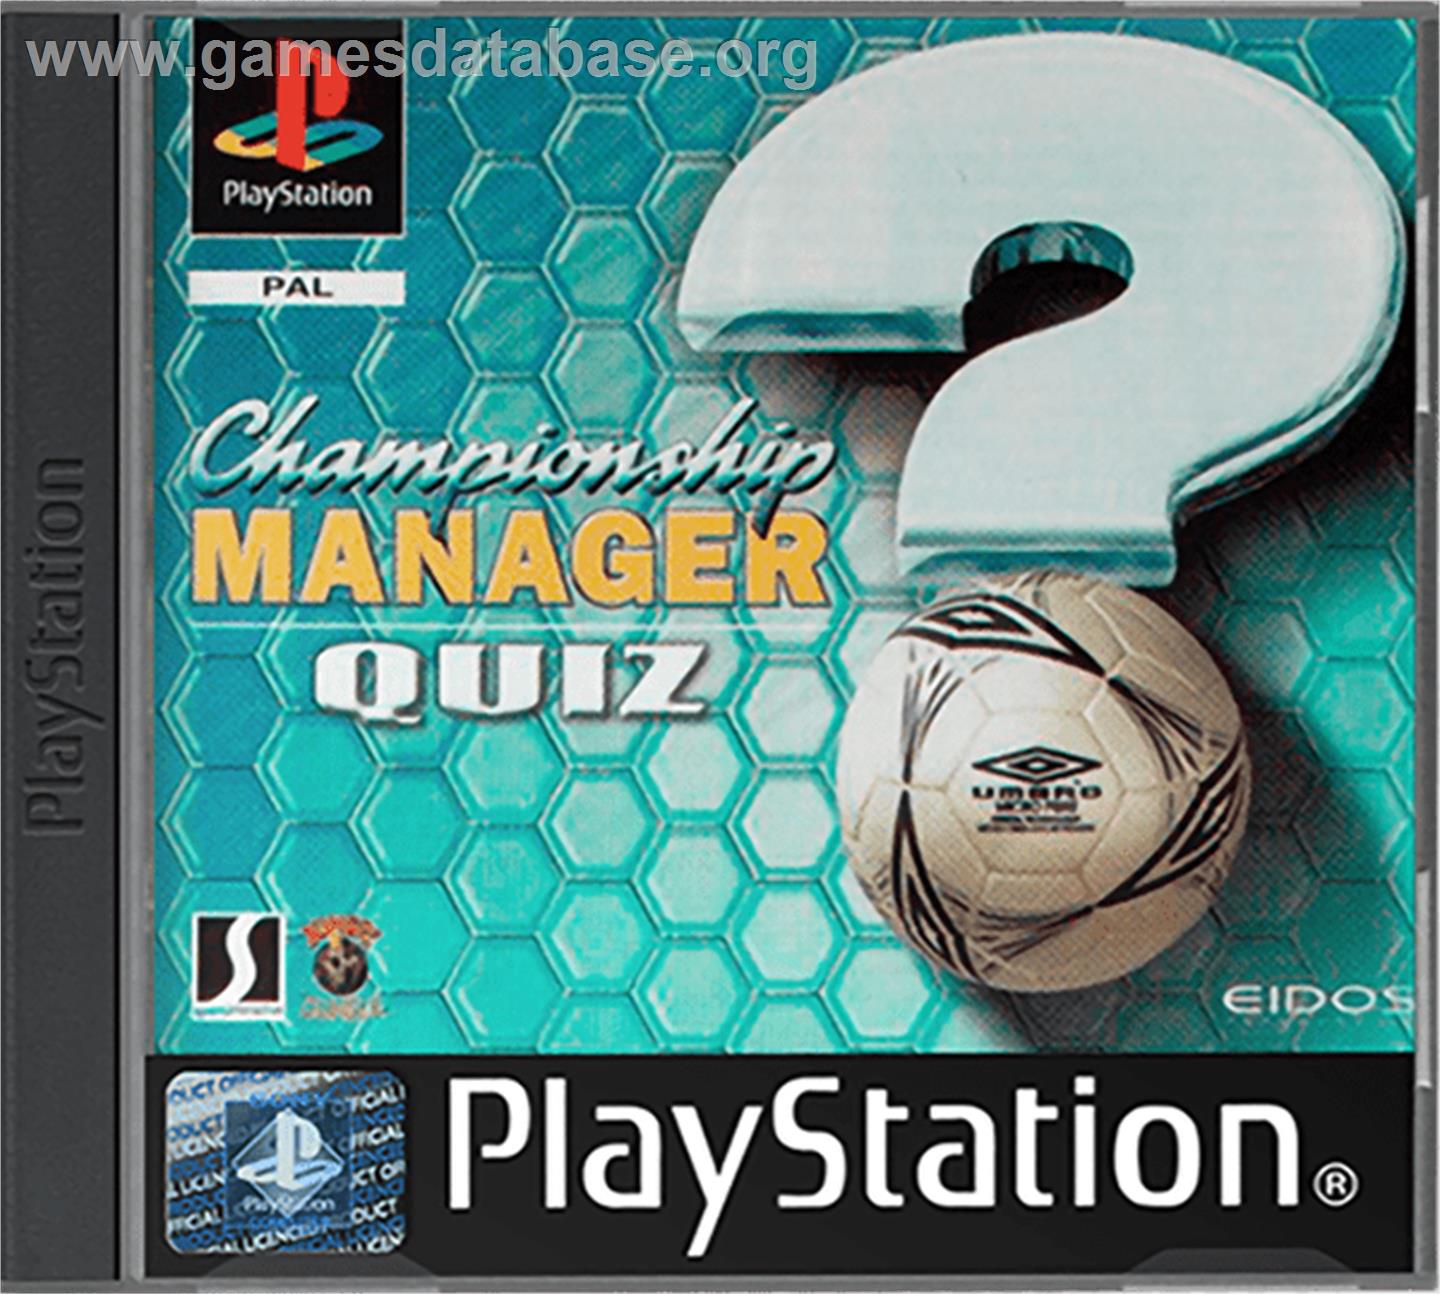 Championship Manager Quiz - Sony Playstation - Artwork - Box